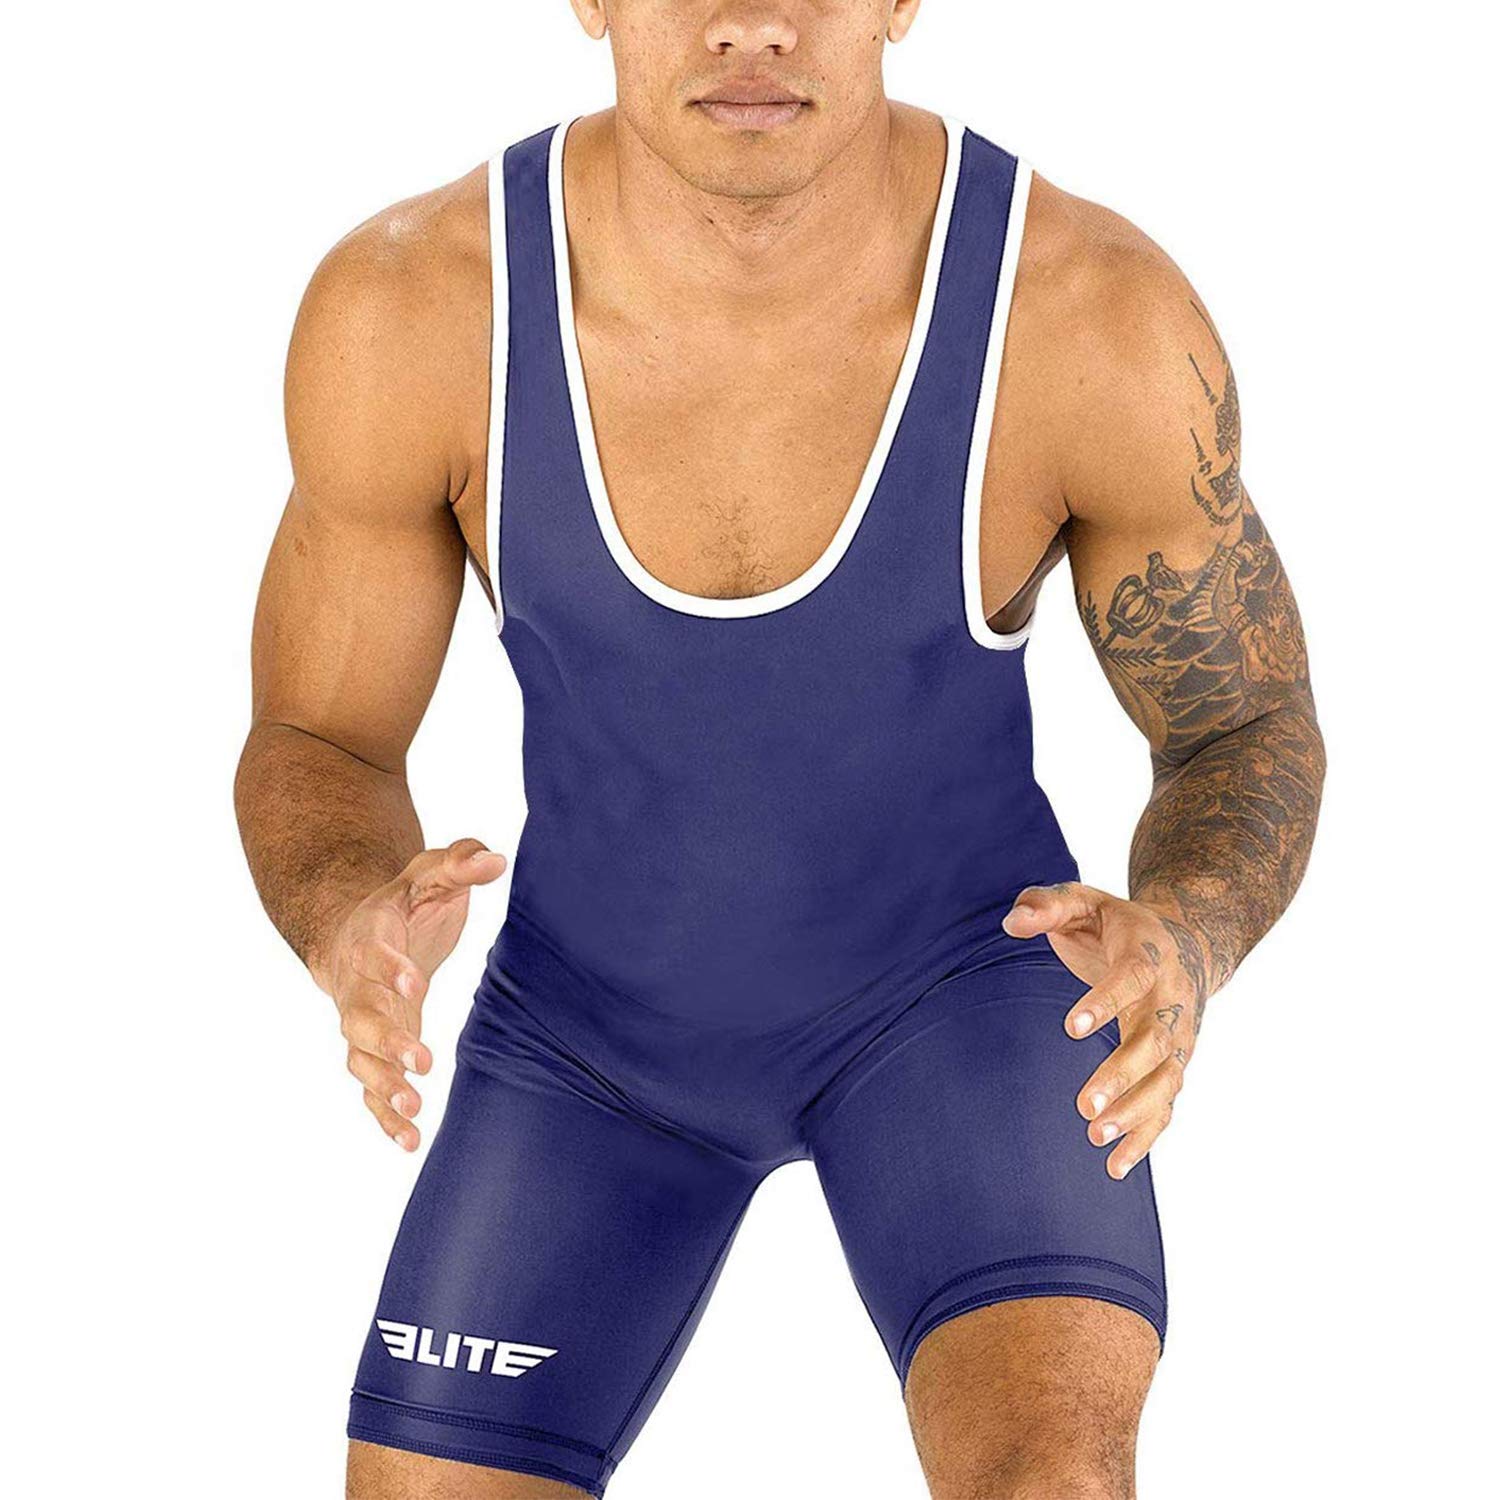 Elite Sports Men’s wrestling singlets, Standard Singlet for Men Wrestling Uniform (Navy, X-Large)